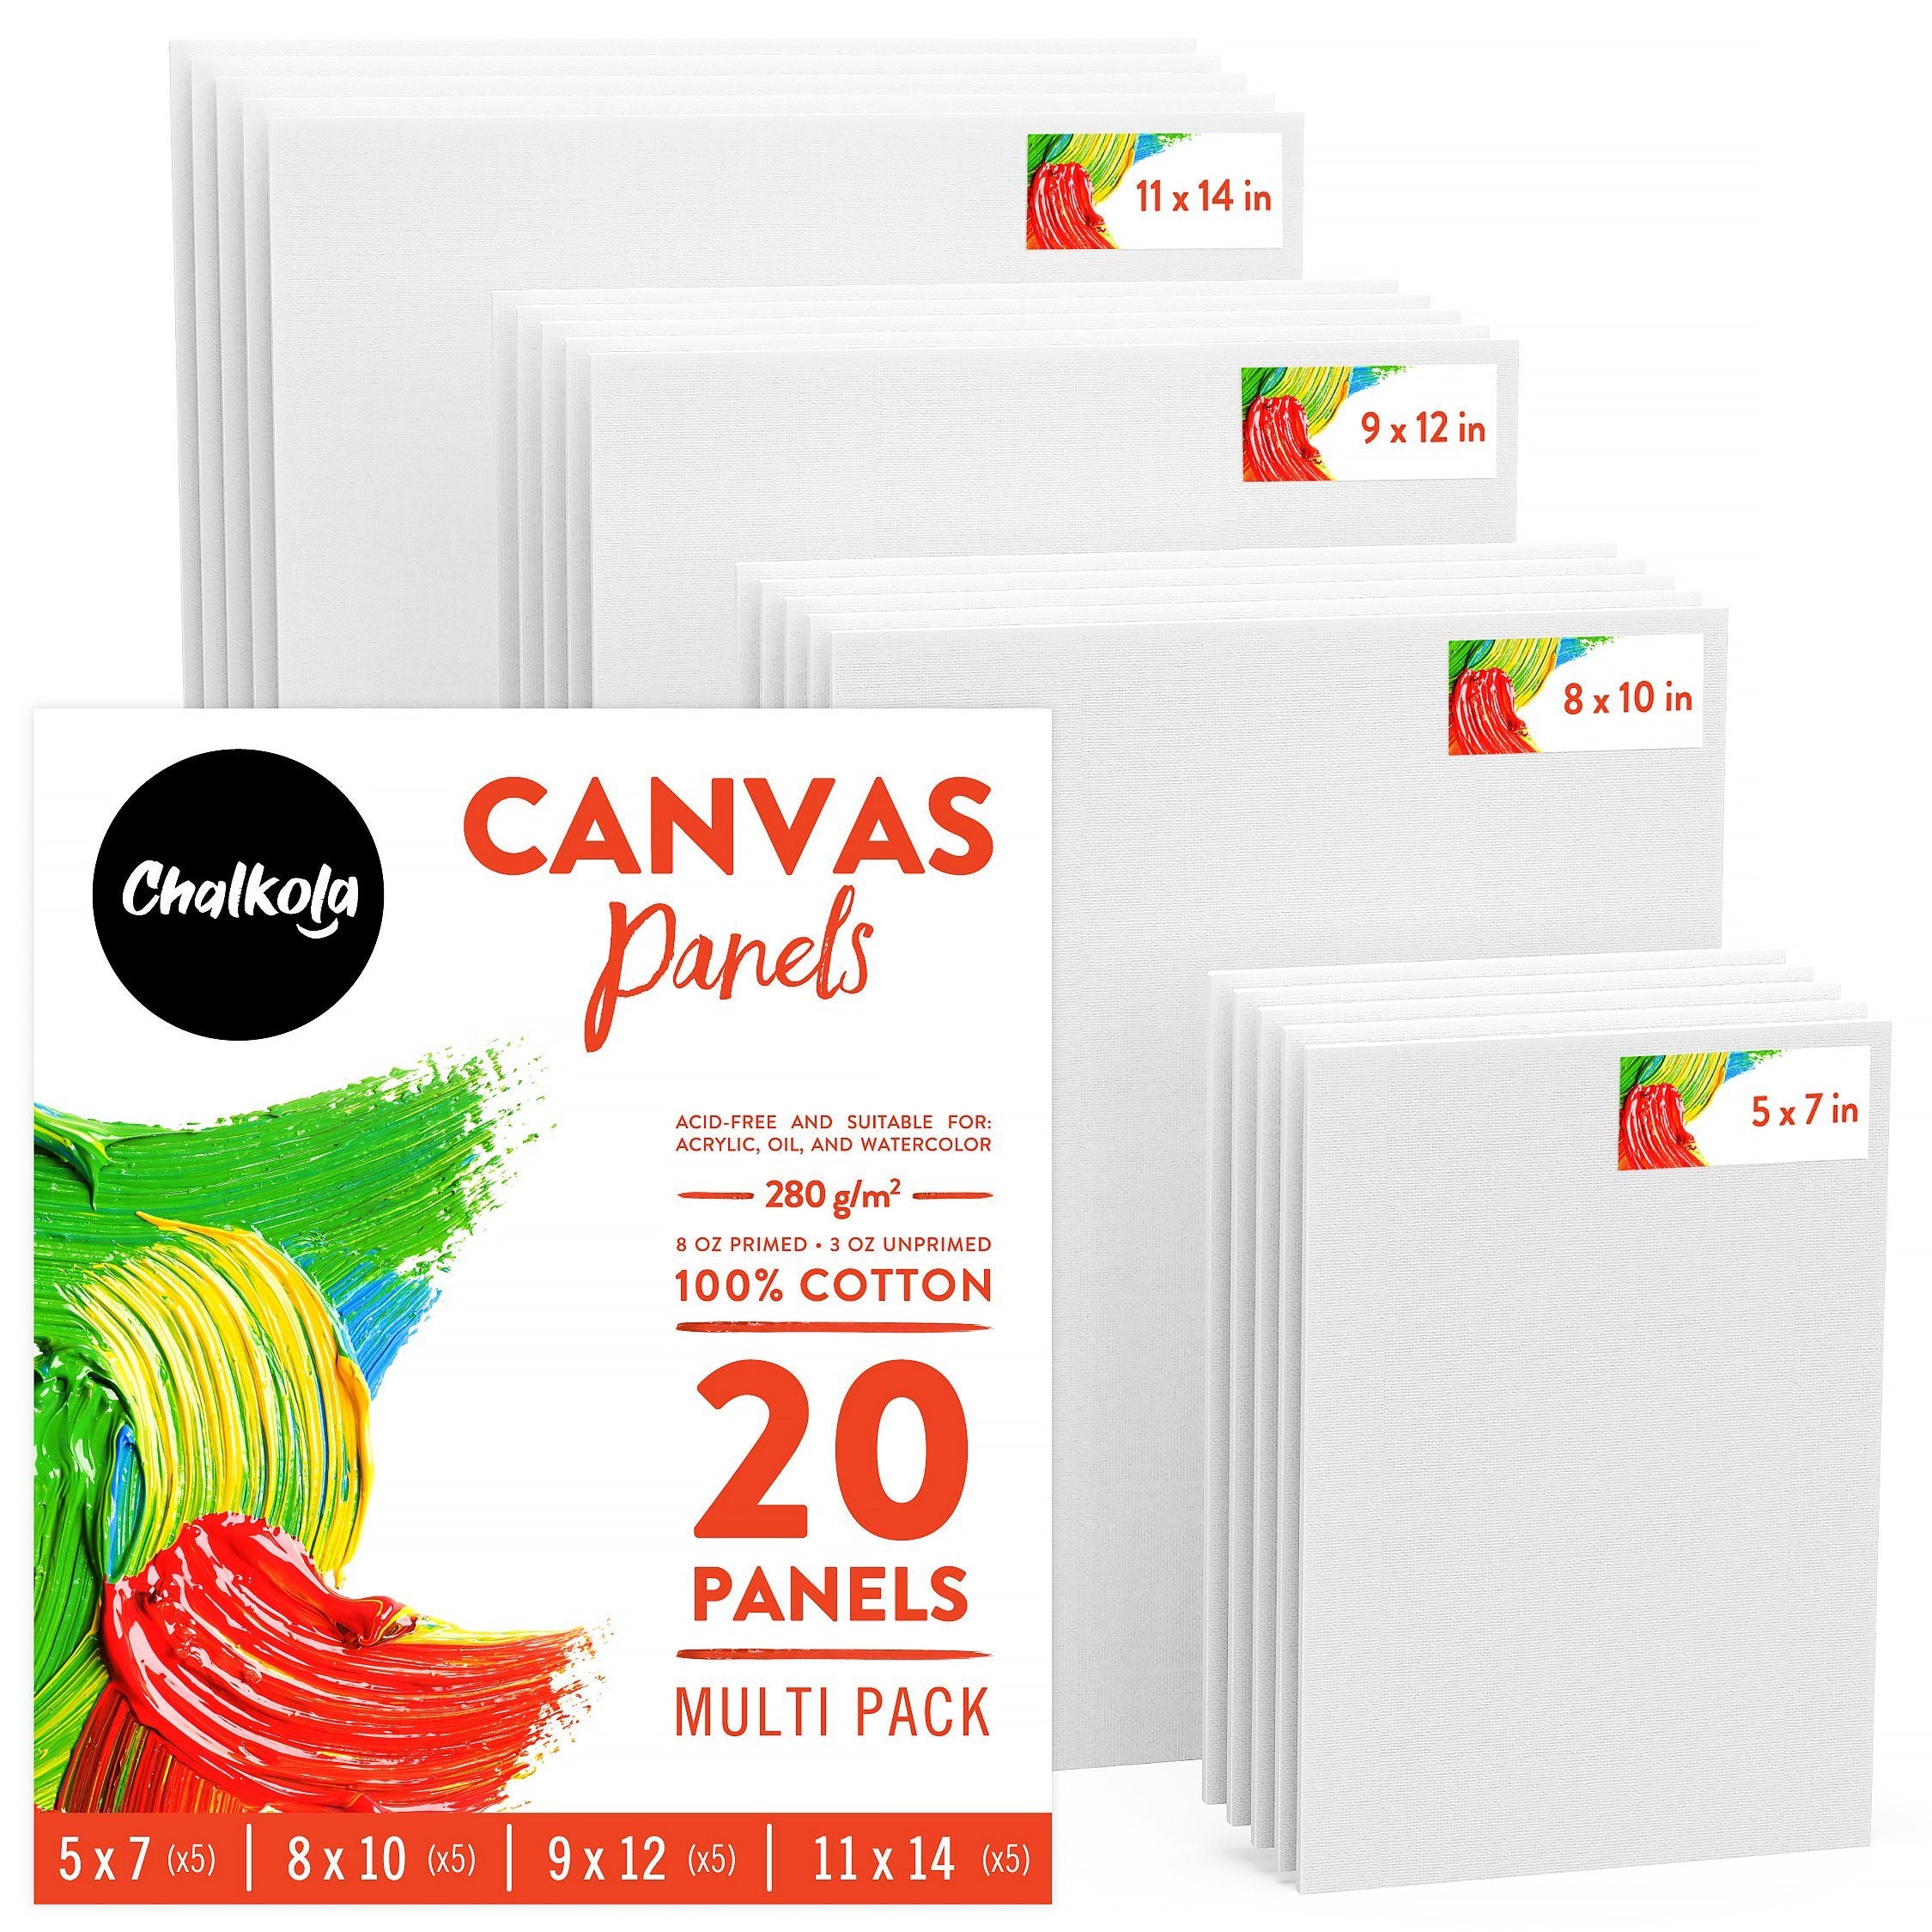 12 Pack of U.S. Art Supply 18 x 24 Professional Quality Canvas Panel Acid-Free